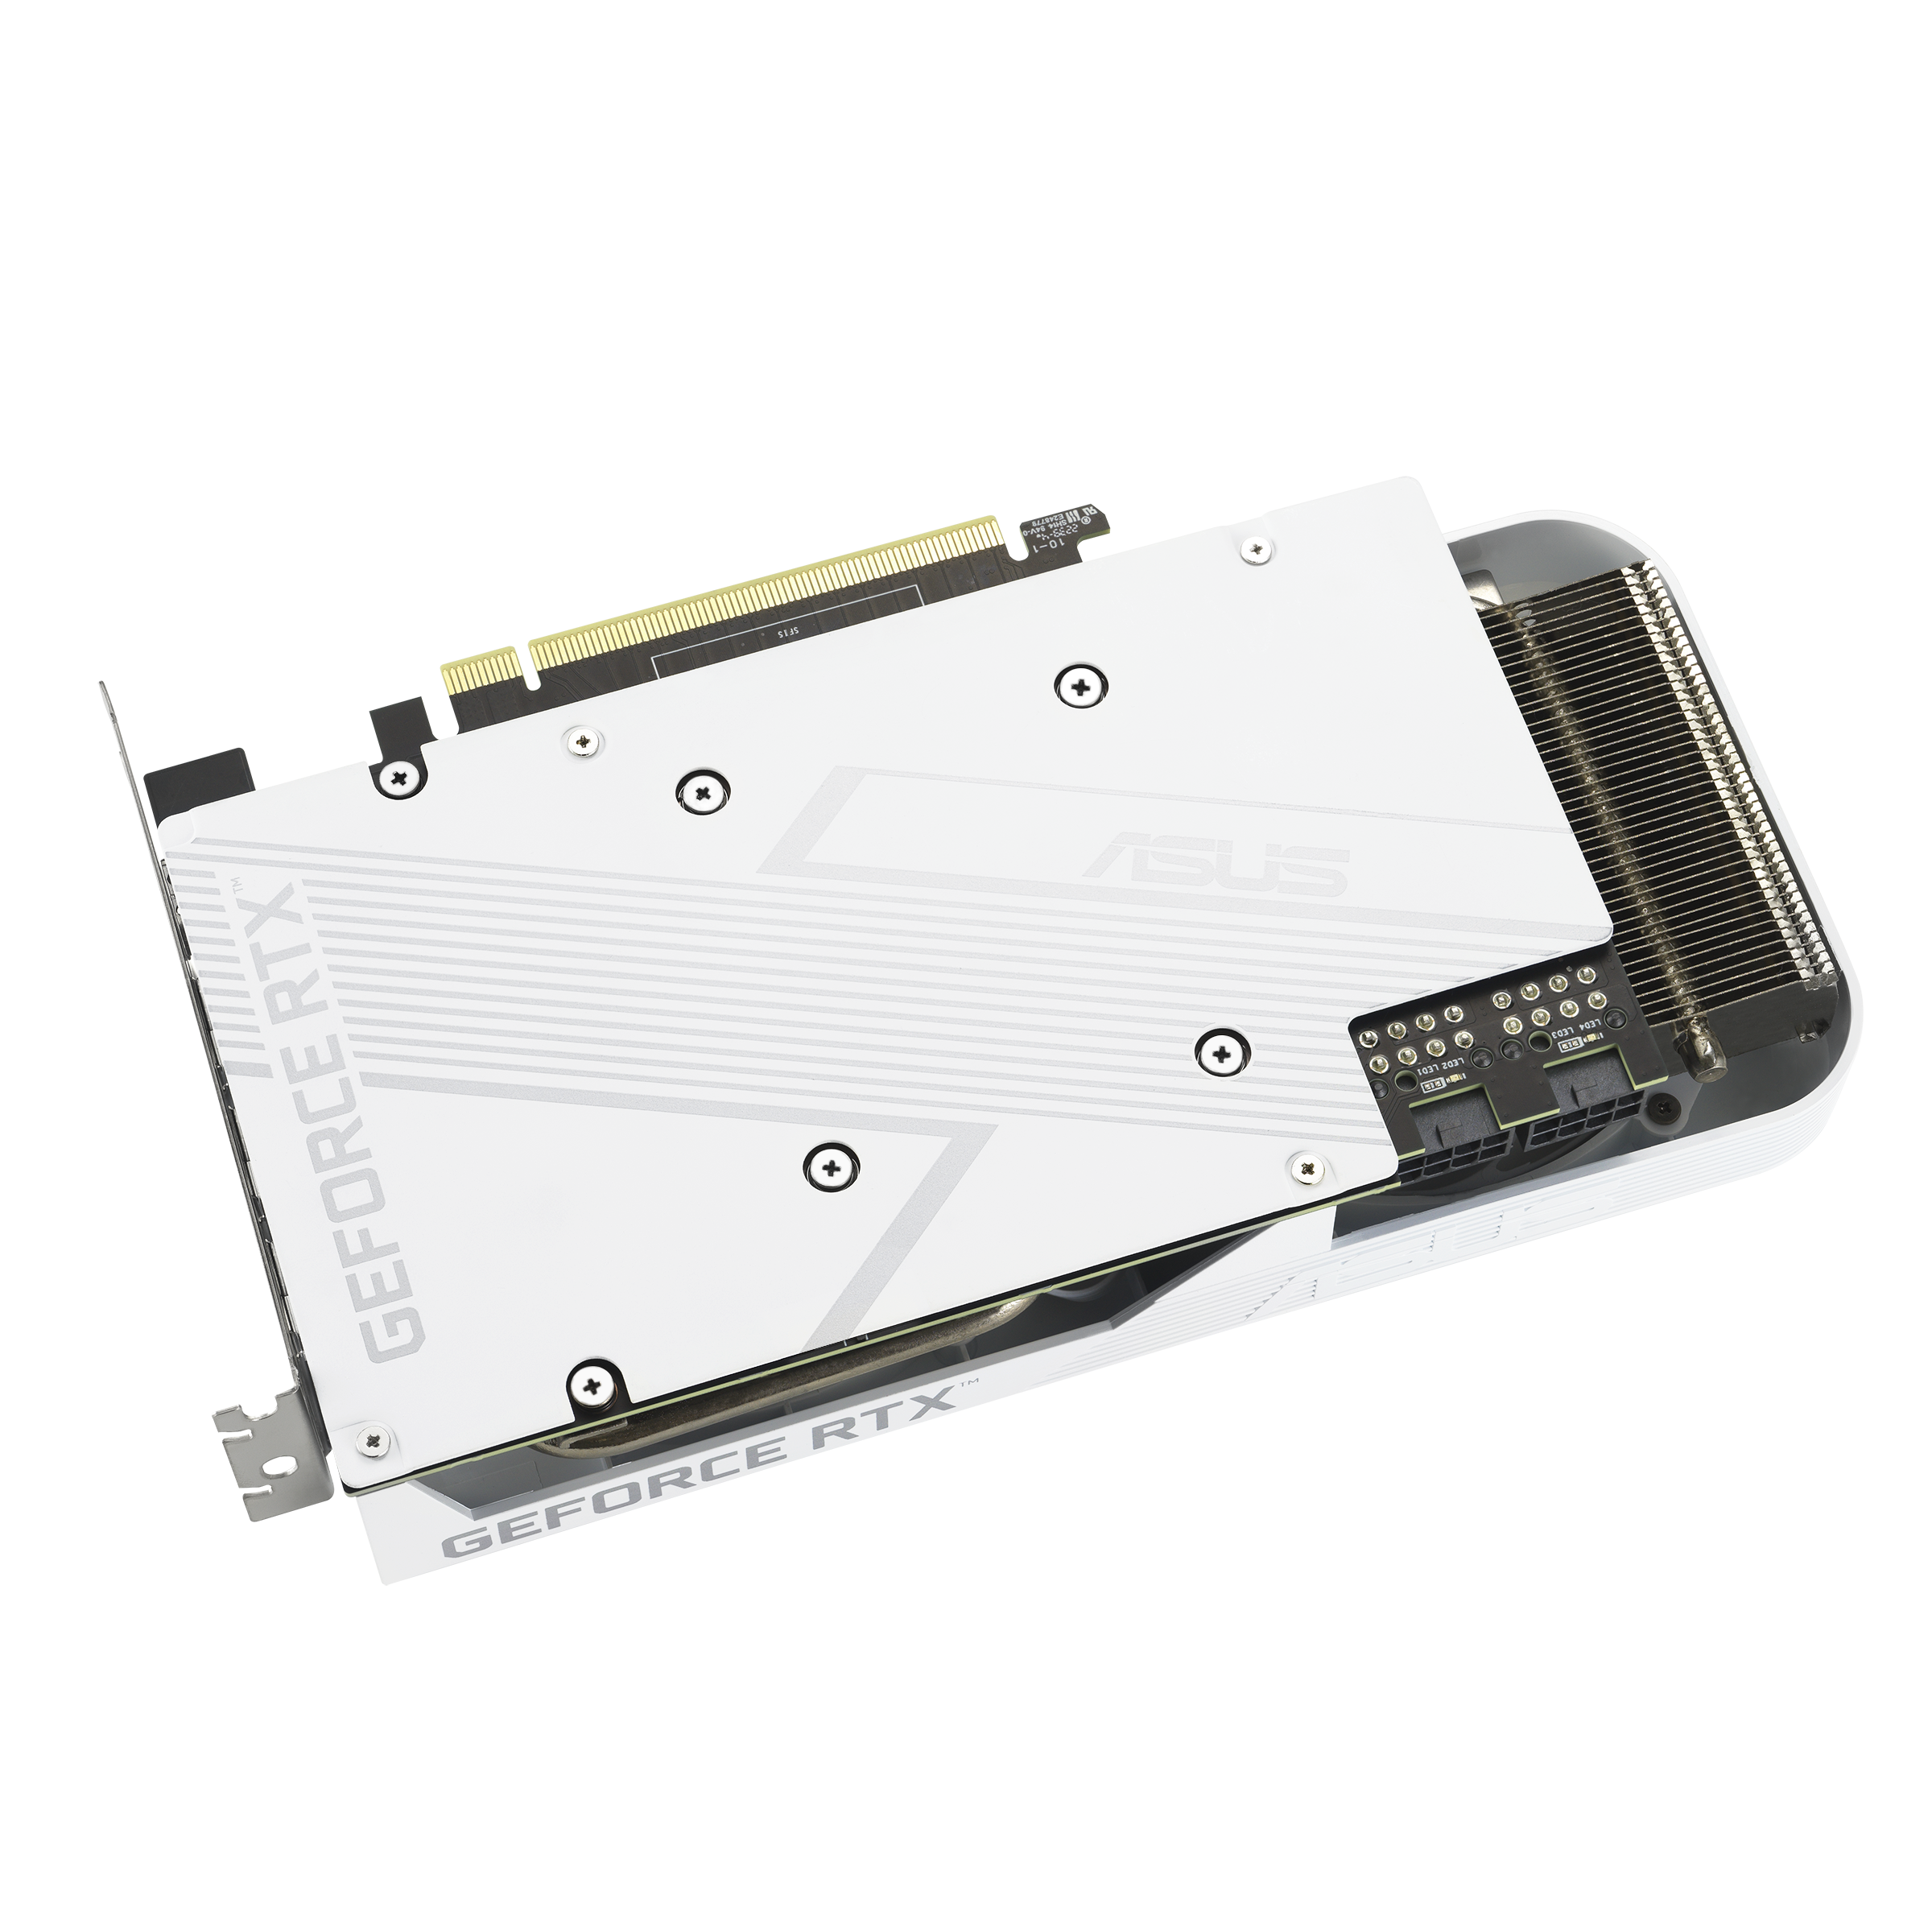 ASUS Dual GeForce RTX 3060 Ti White OC Edition 8GB GDDR6X 